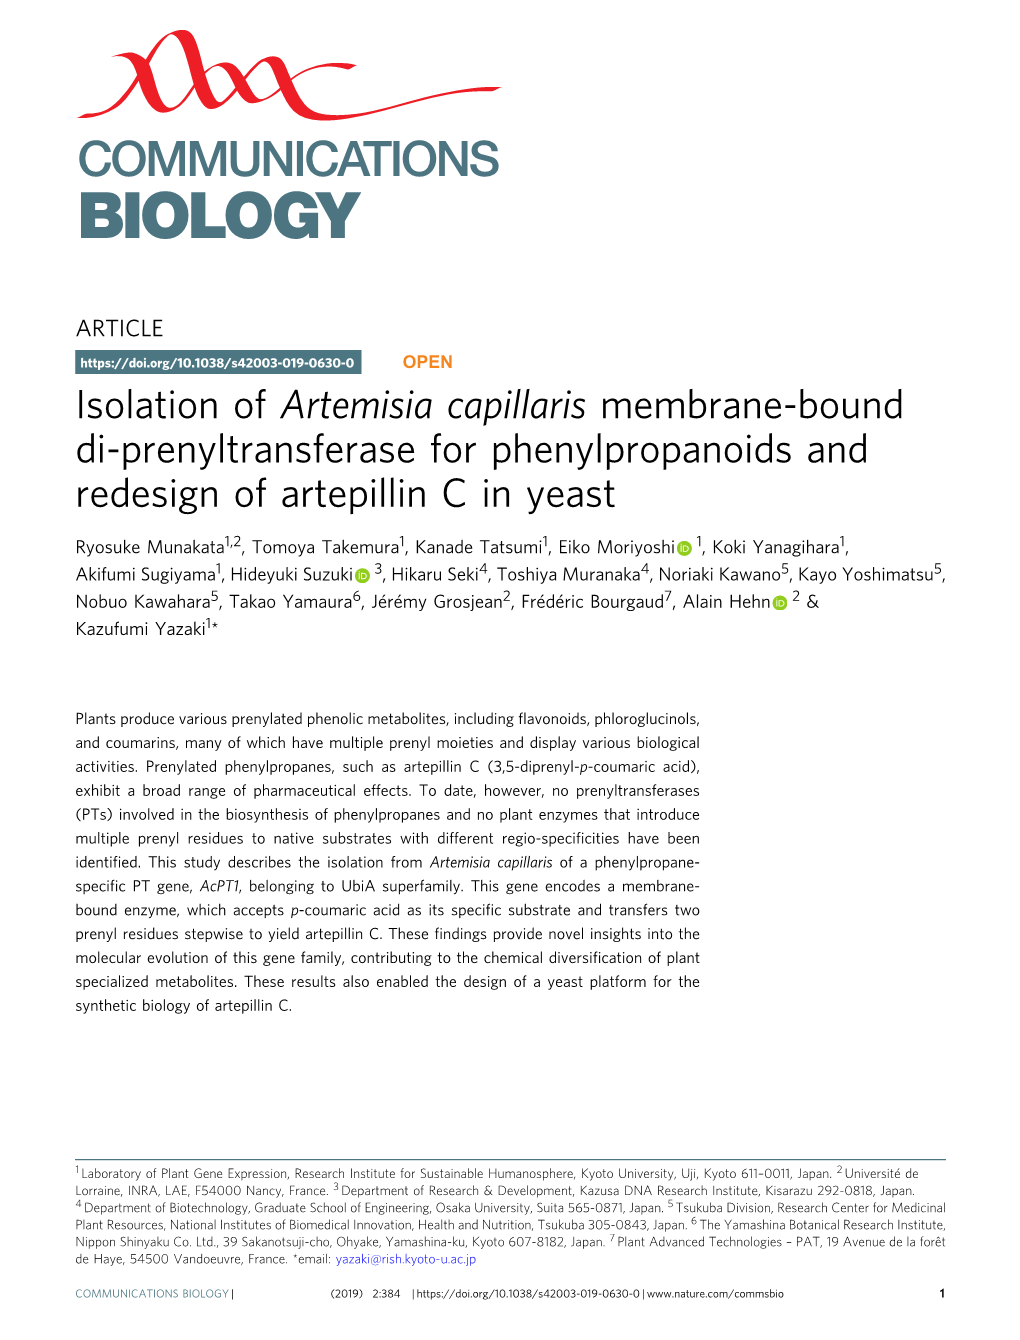 Isolation of Artemisia Capillaris Membrane-Bound Di-Prenyltransferase for Phenylpropanoids and Redesign of Artepillin C in Yeast